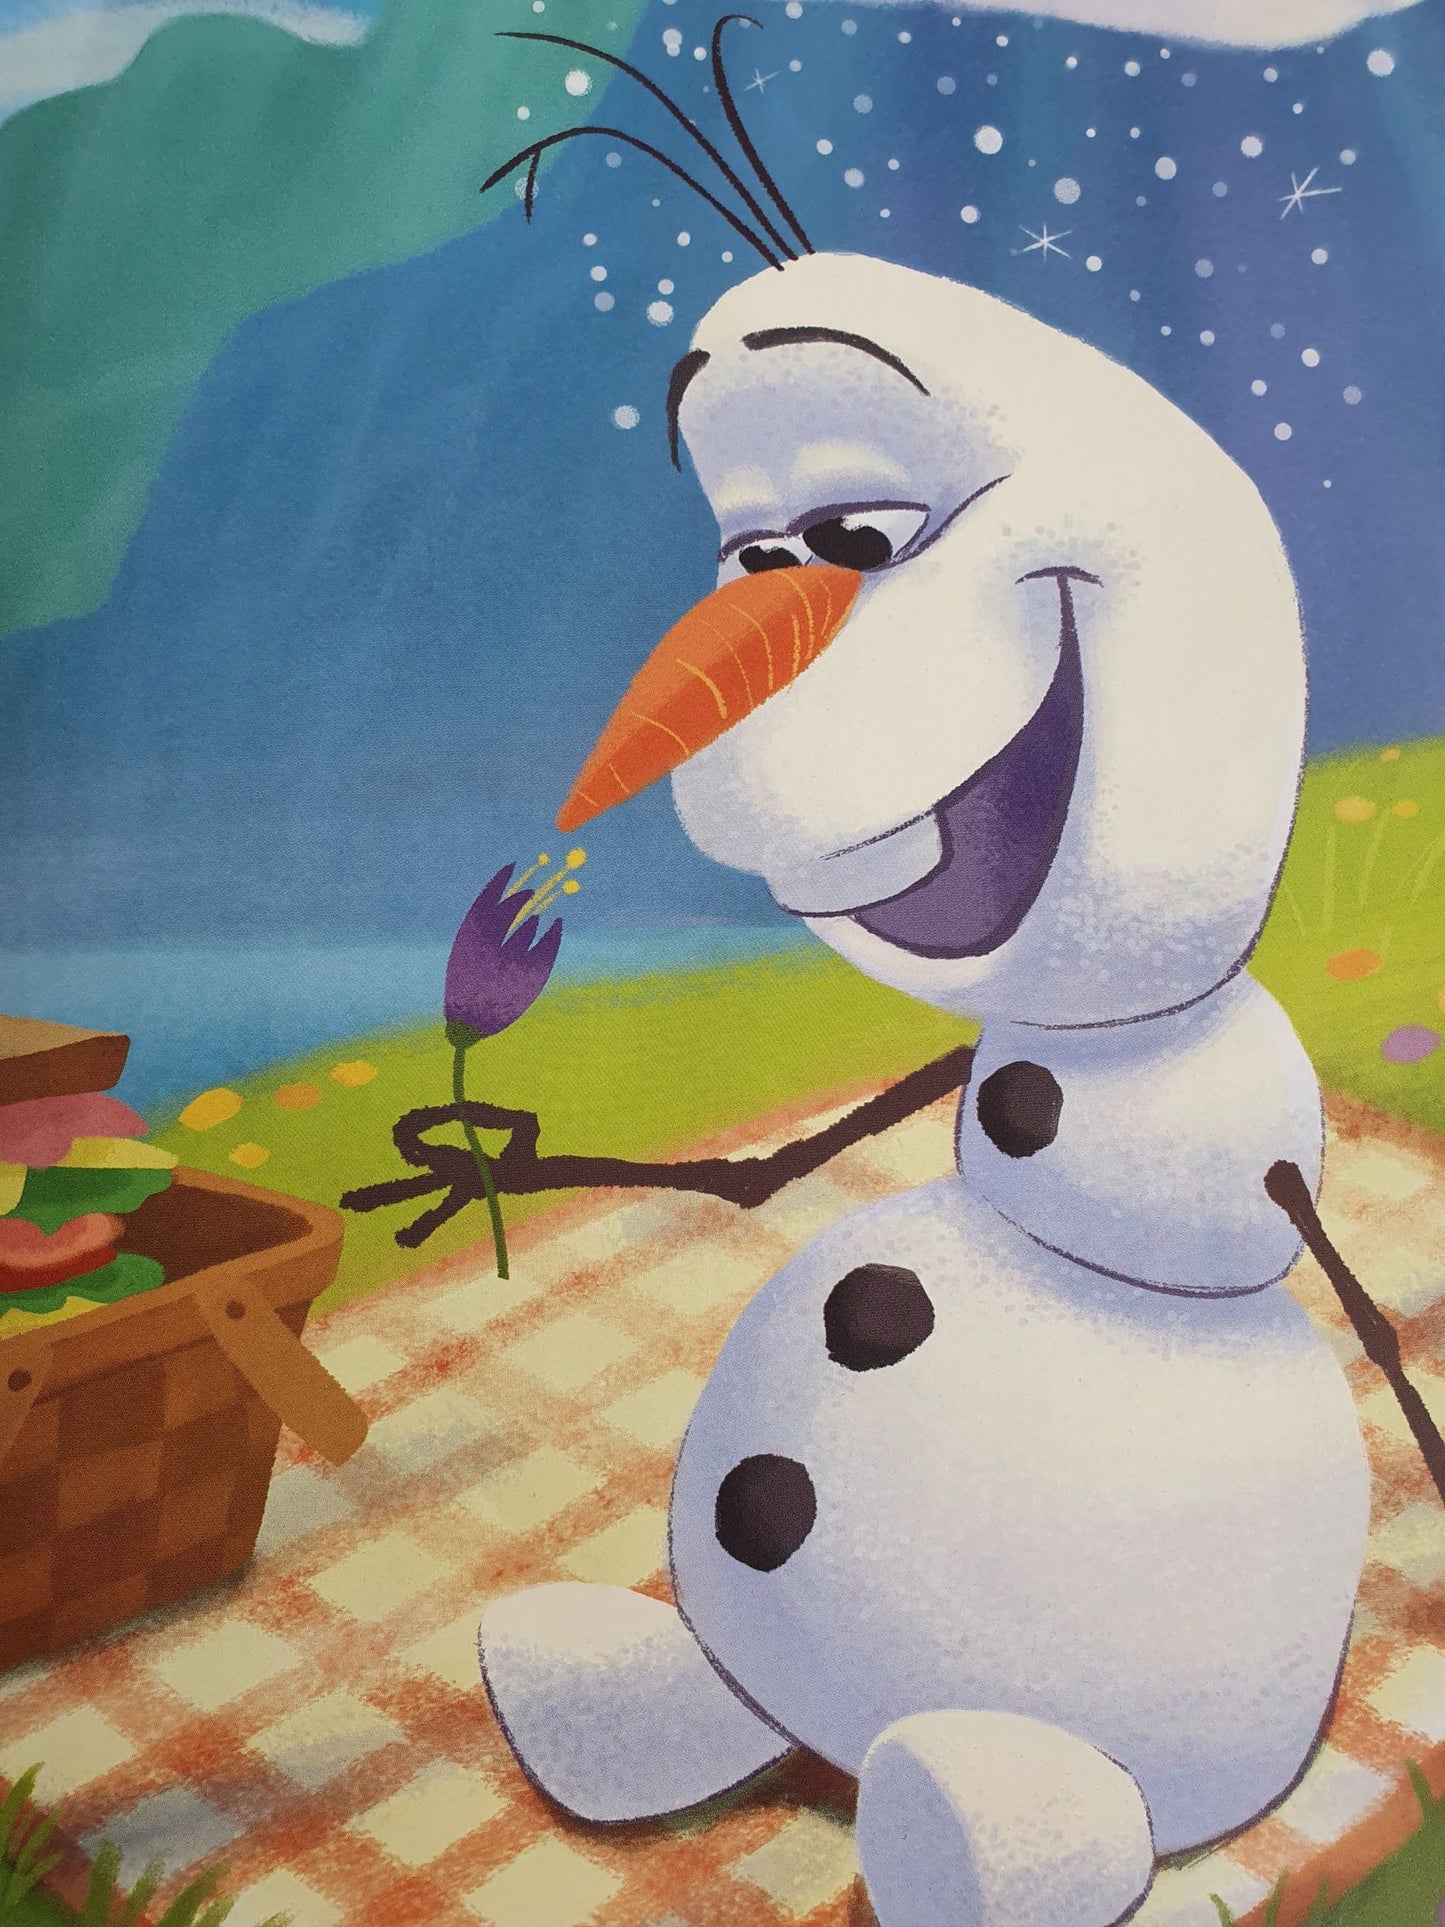 Disney Frozen - An Amazing Showman Like New Disney  (4603216396343)